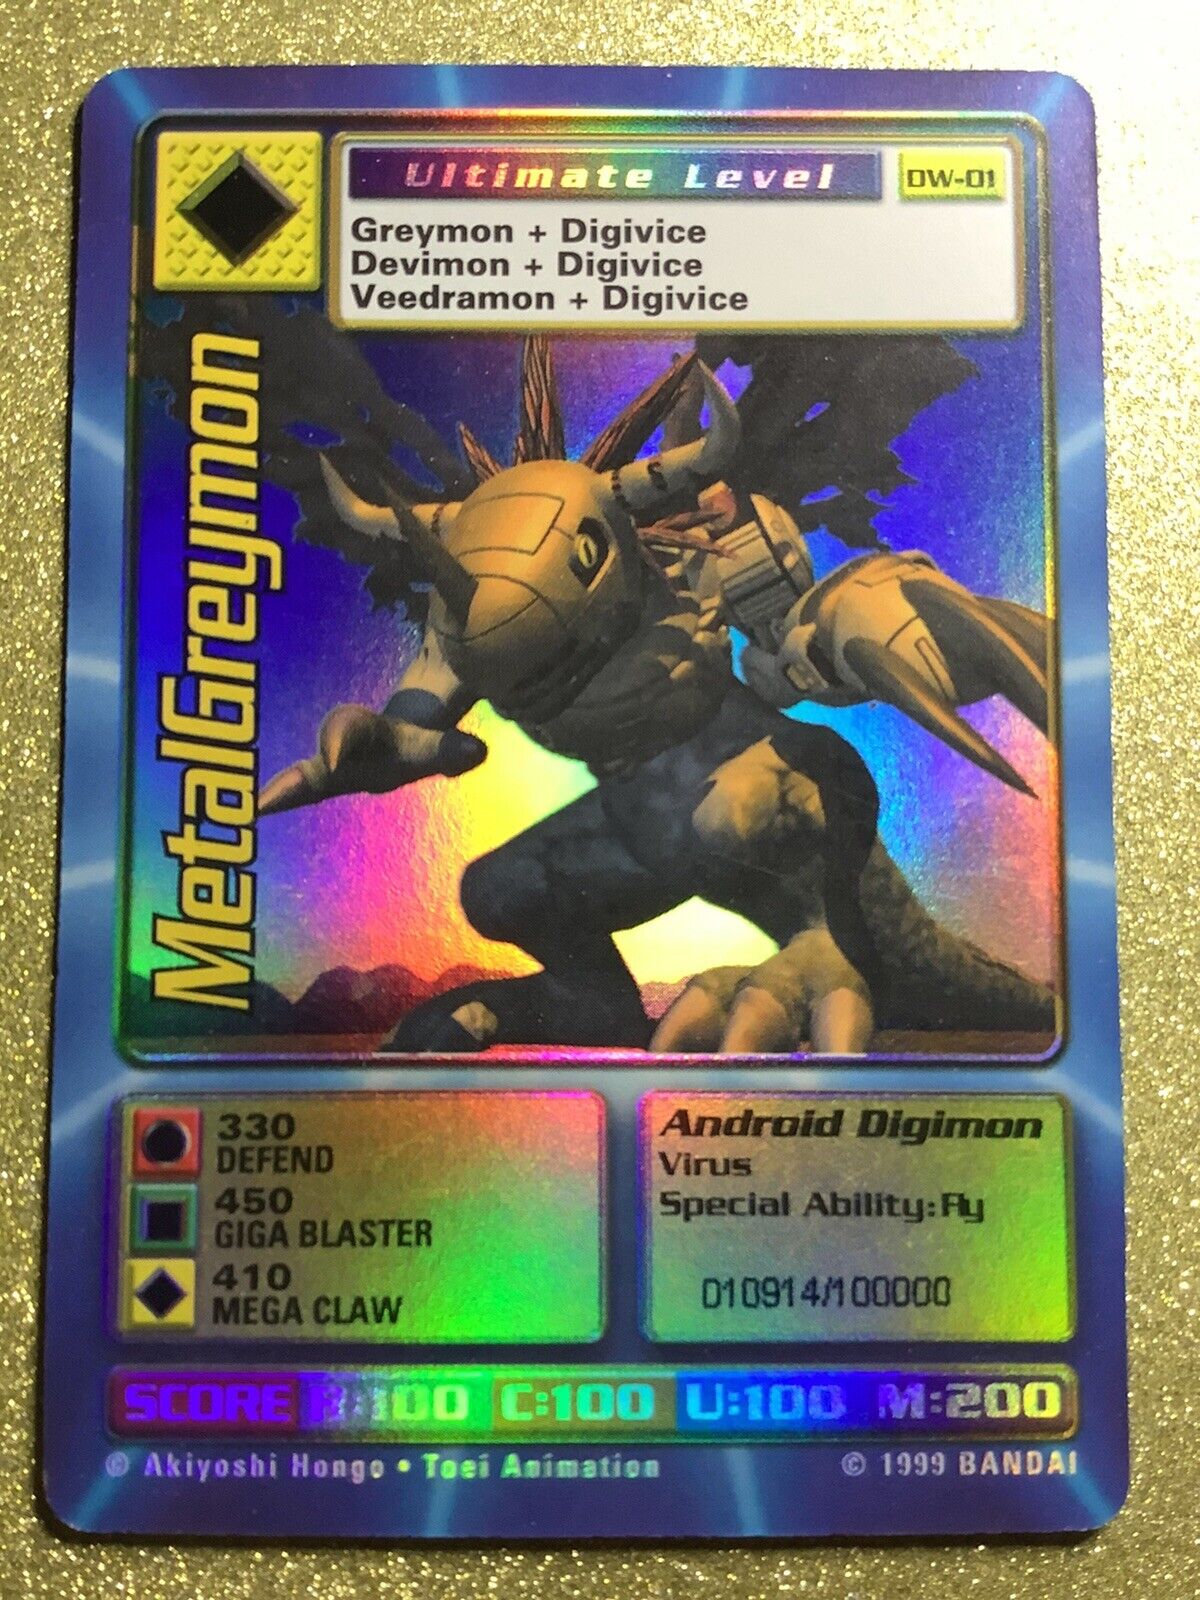 Digimon World PlayStation Promo DW-01 MetalGreymon - number 010914 / 100,000